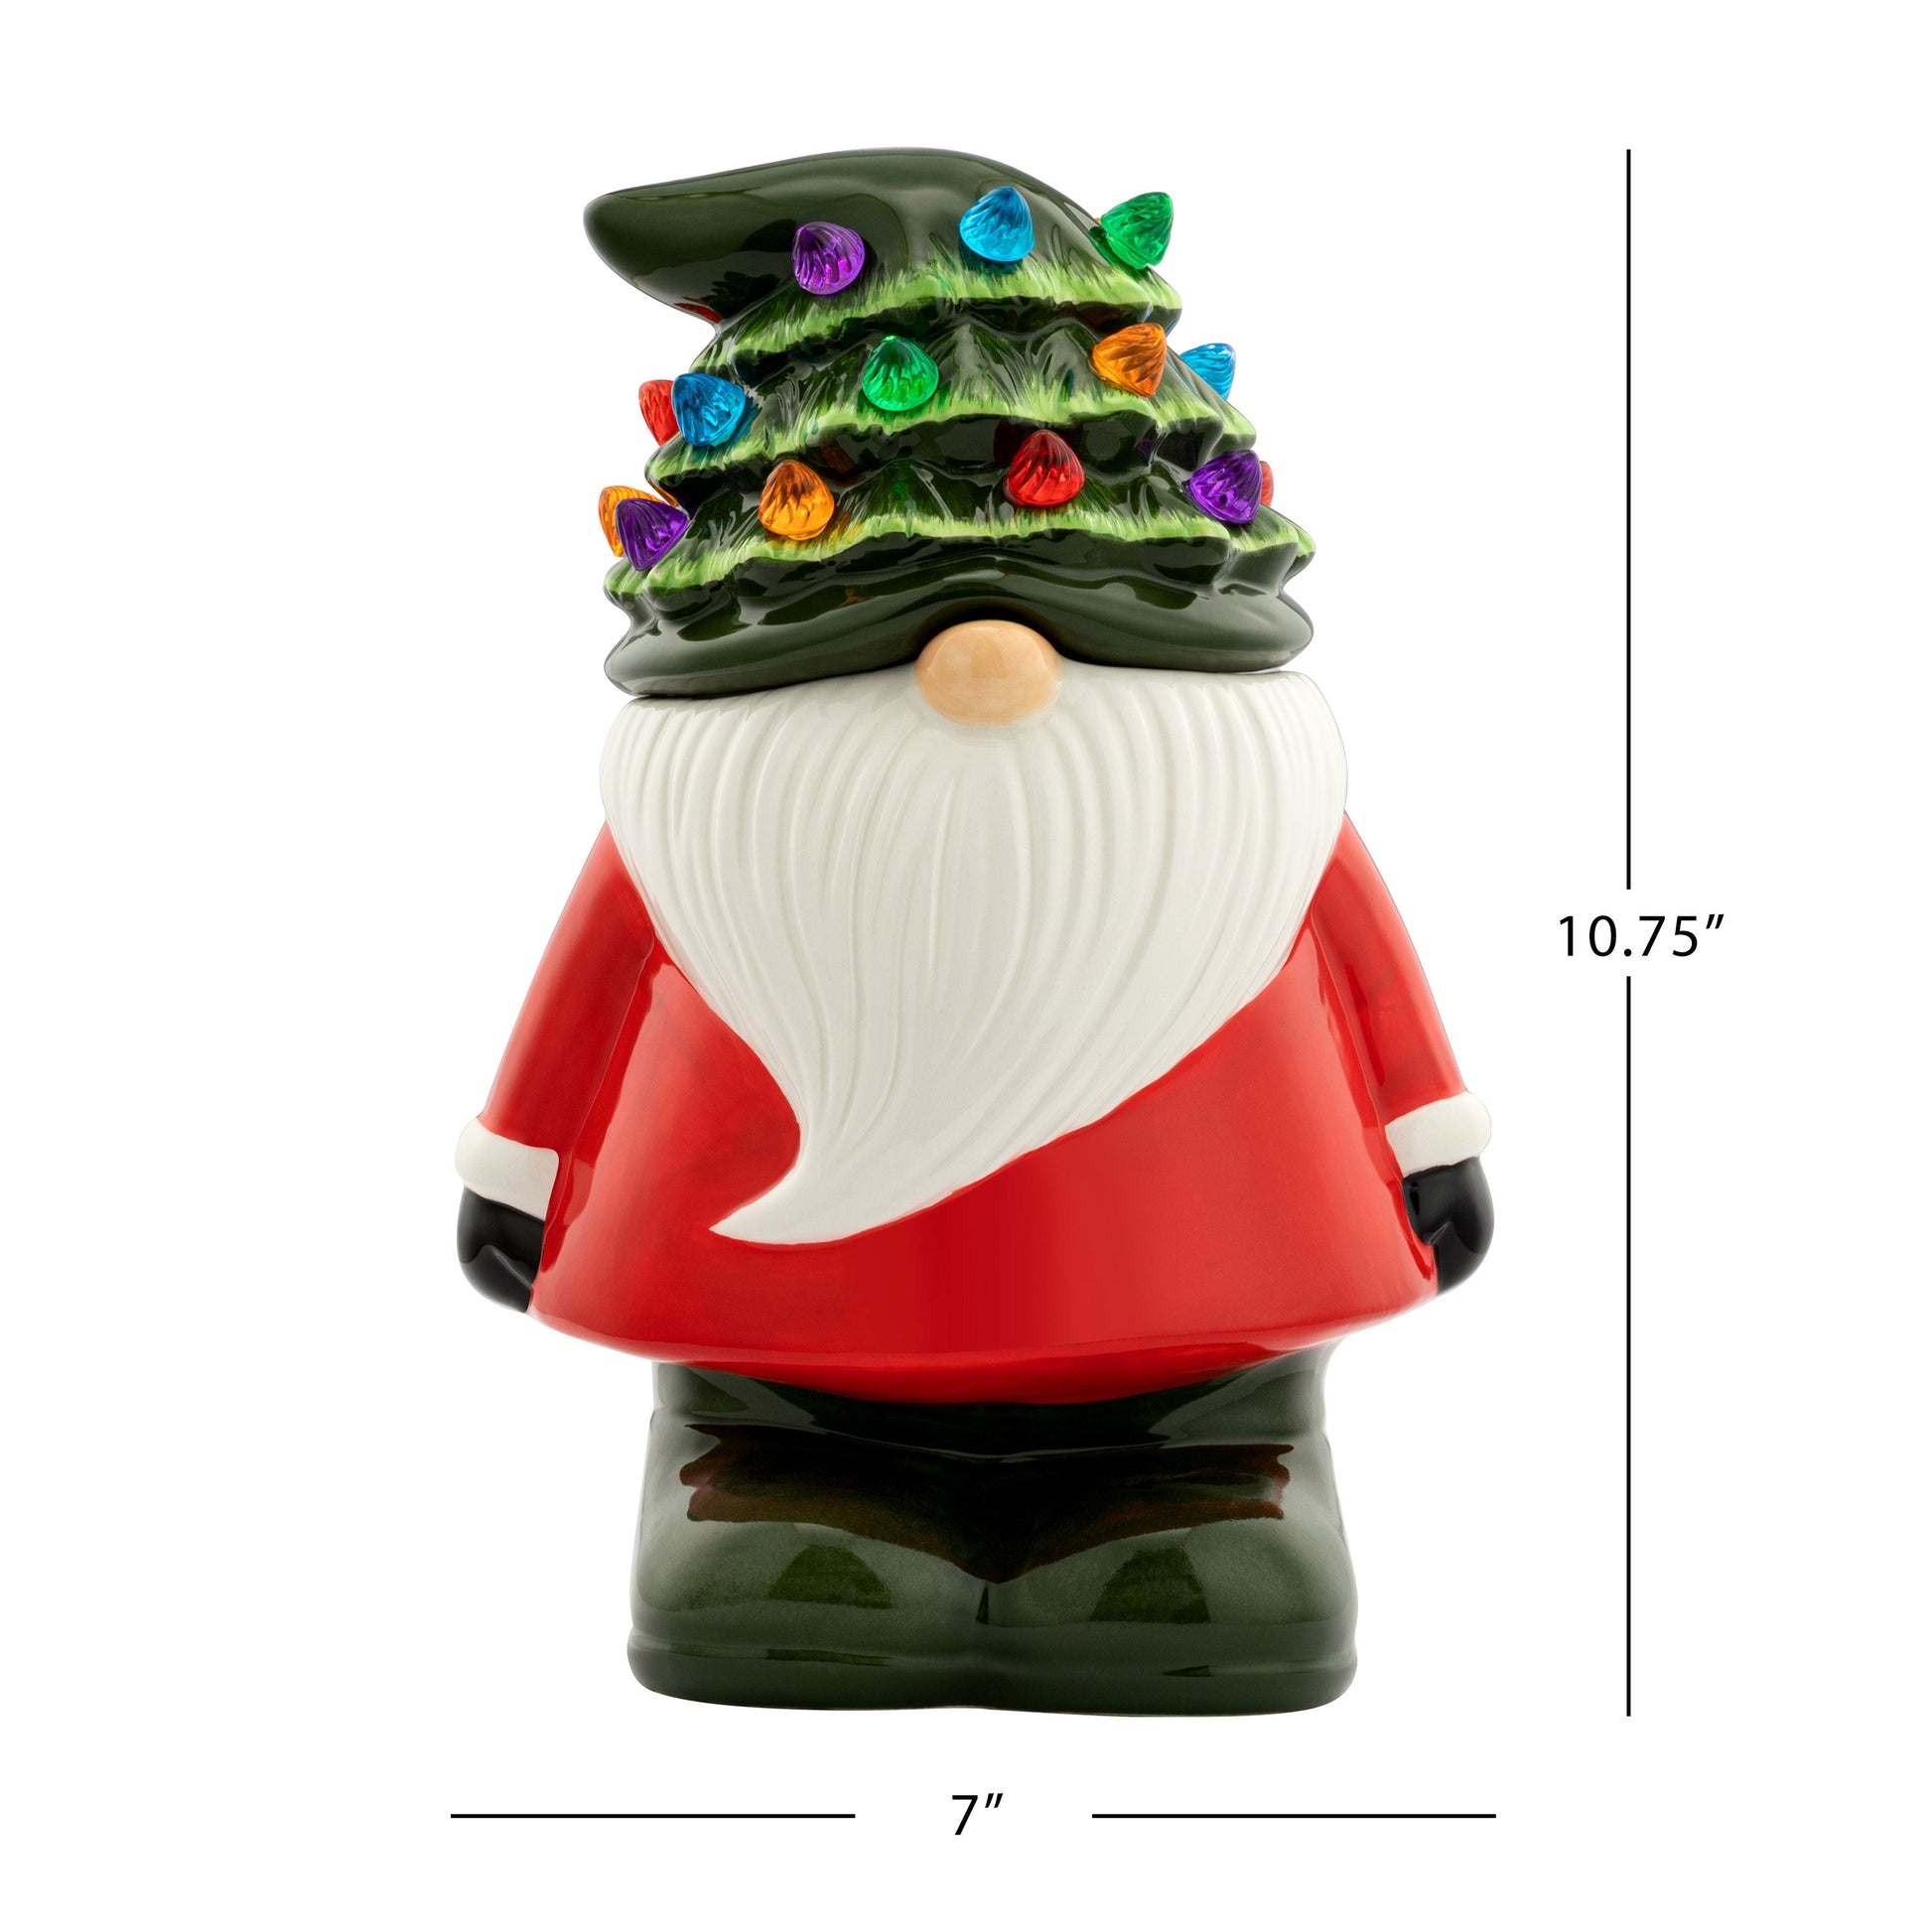 10.75" Nostalgic Ceramic Lit Gnome Cookie Jar - Mr. Christmas